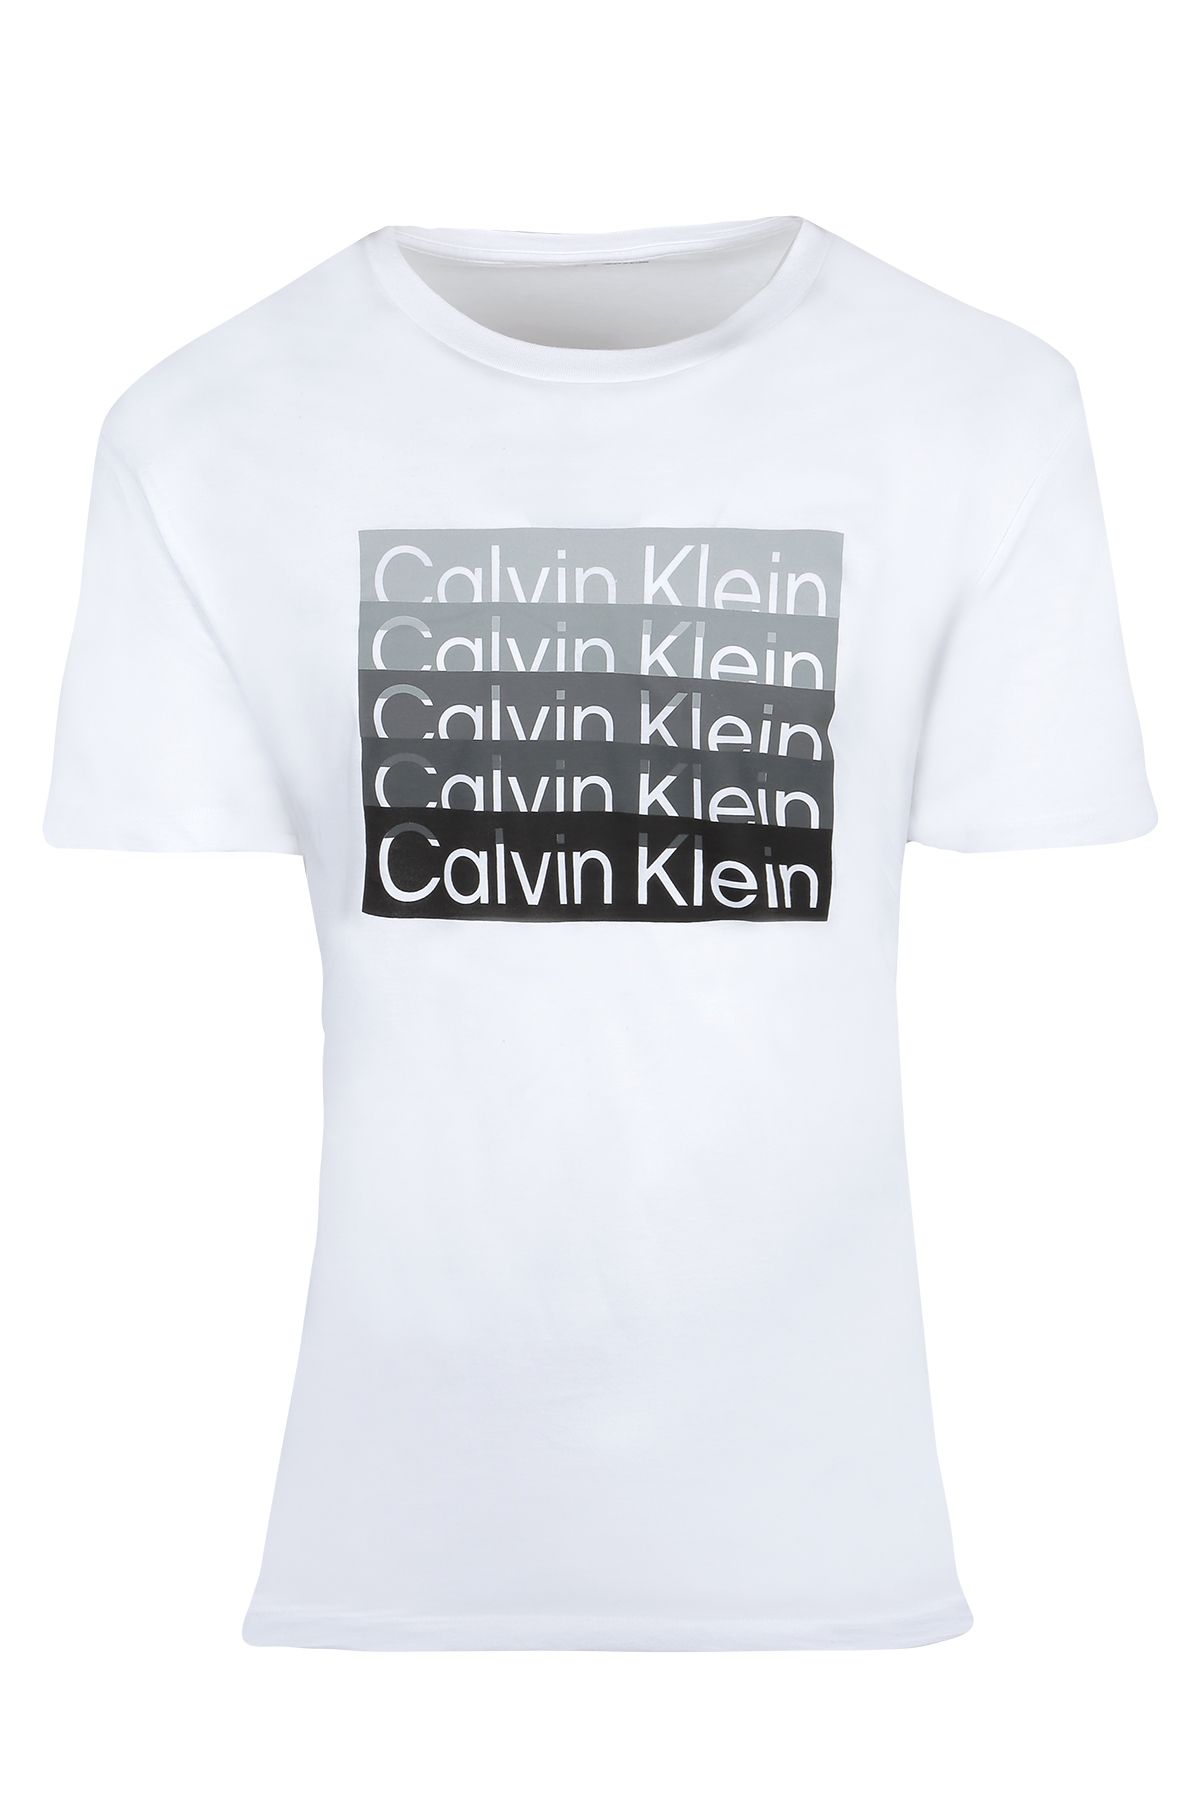 Calvin Klein Erkek T-shırt 40ıc836-540